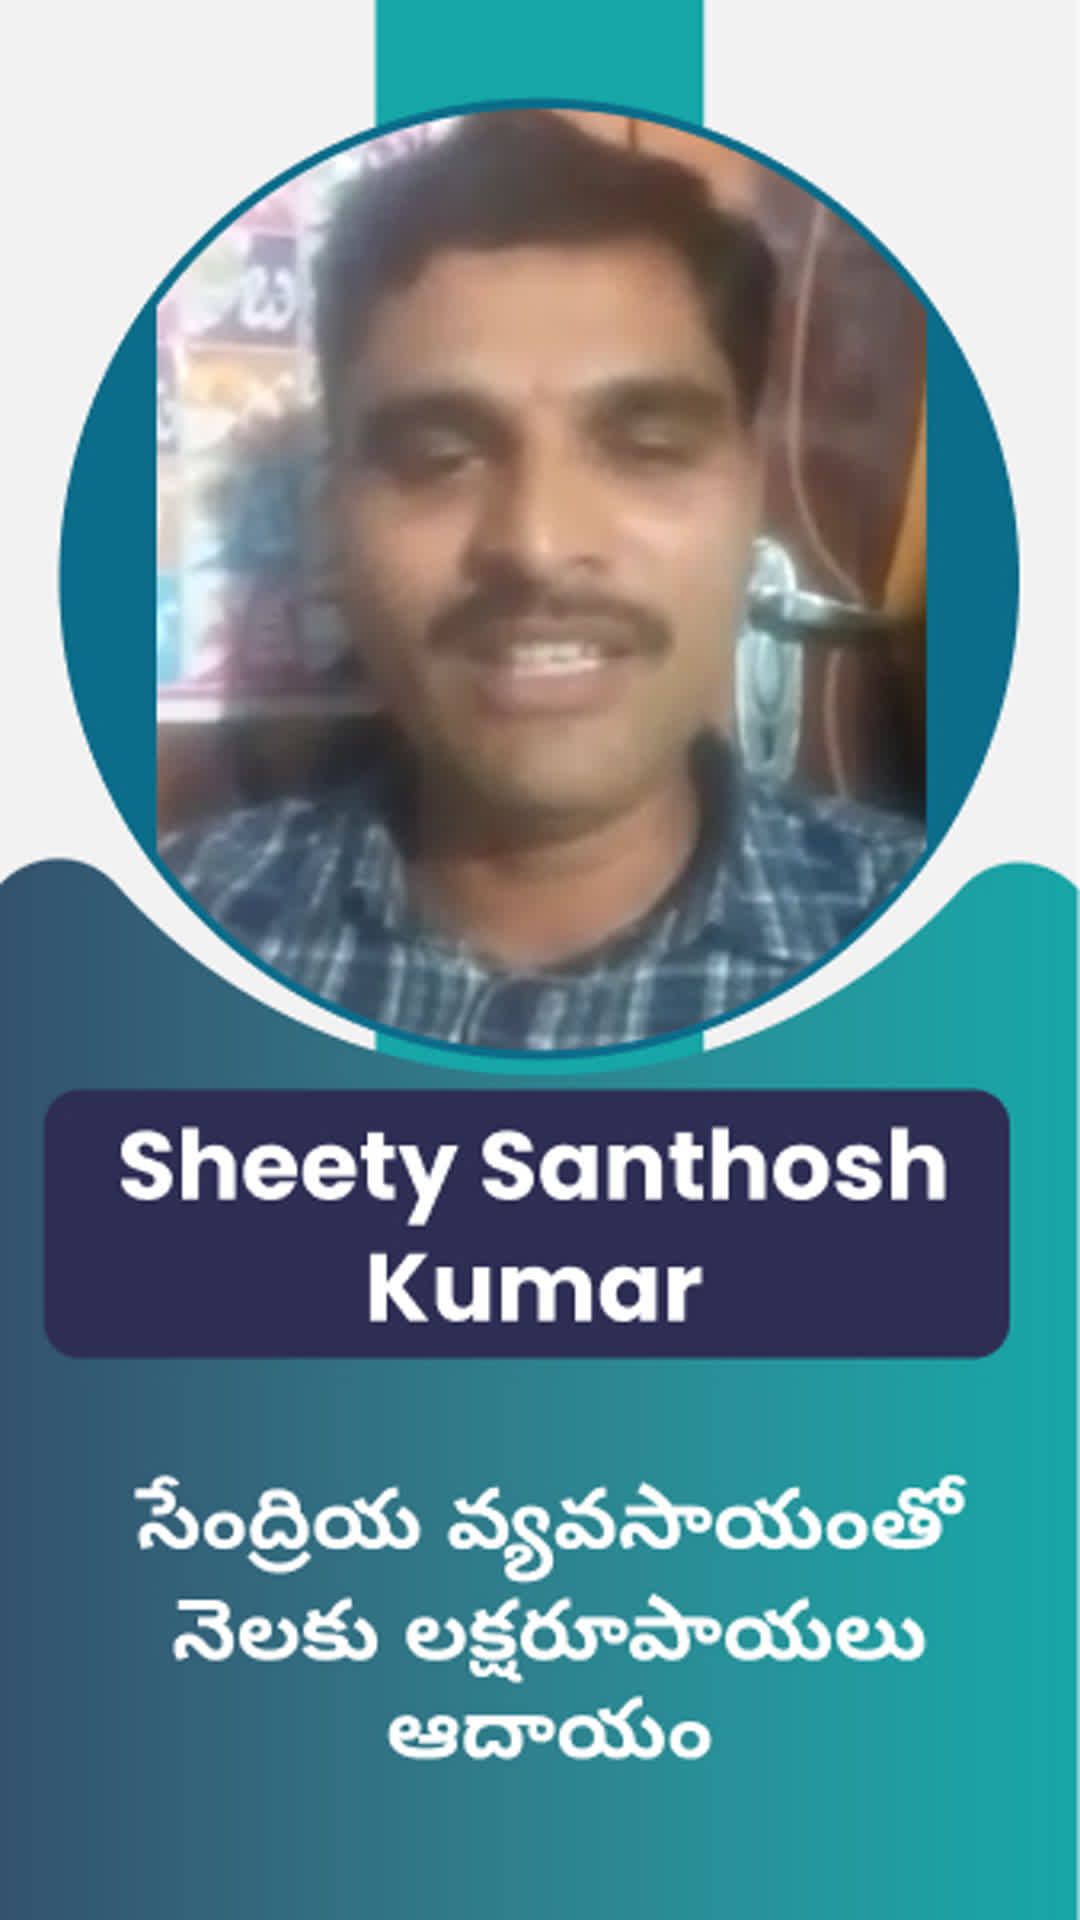 Shetty Santhosh kumar's Honest Review of ffreedom app - Rangareddy ,Telangana